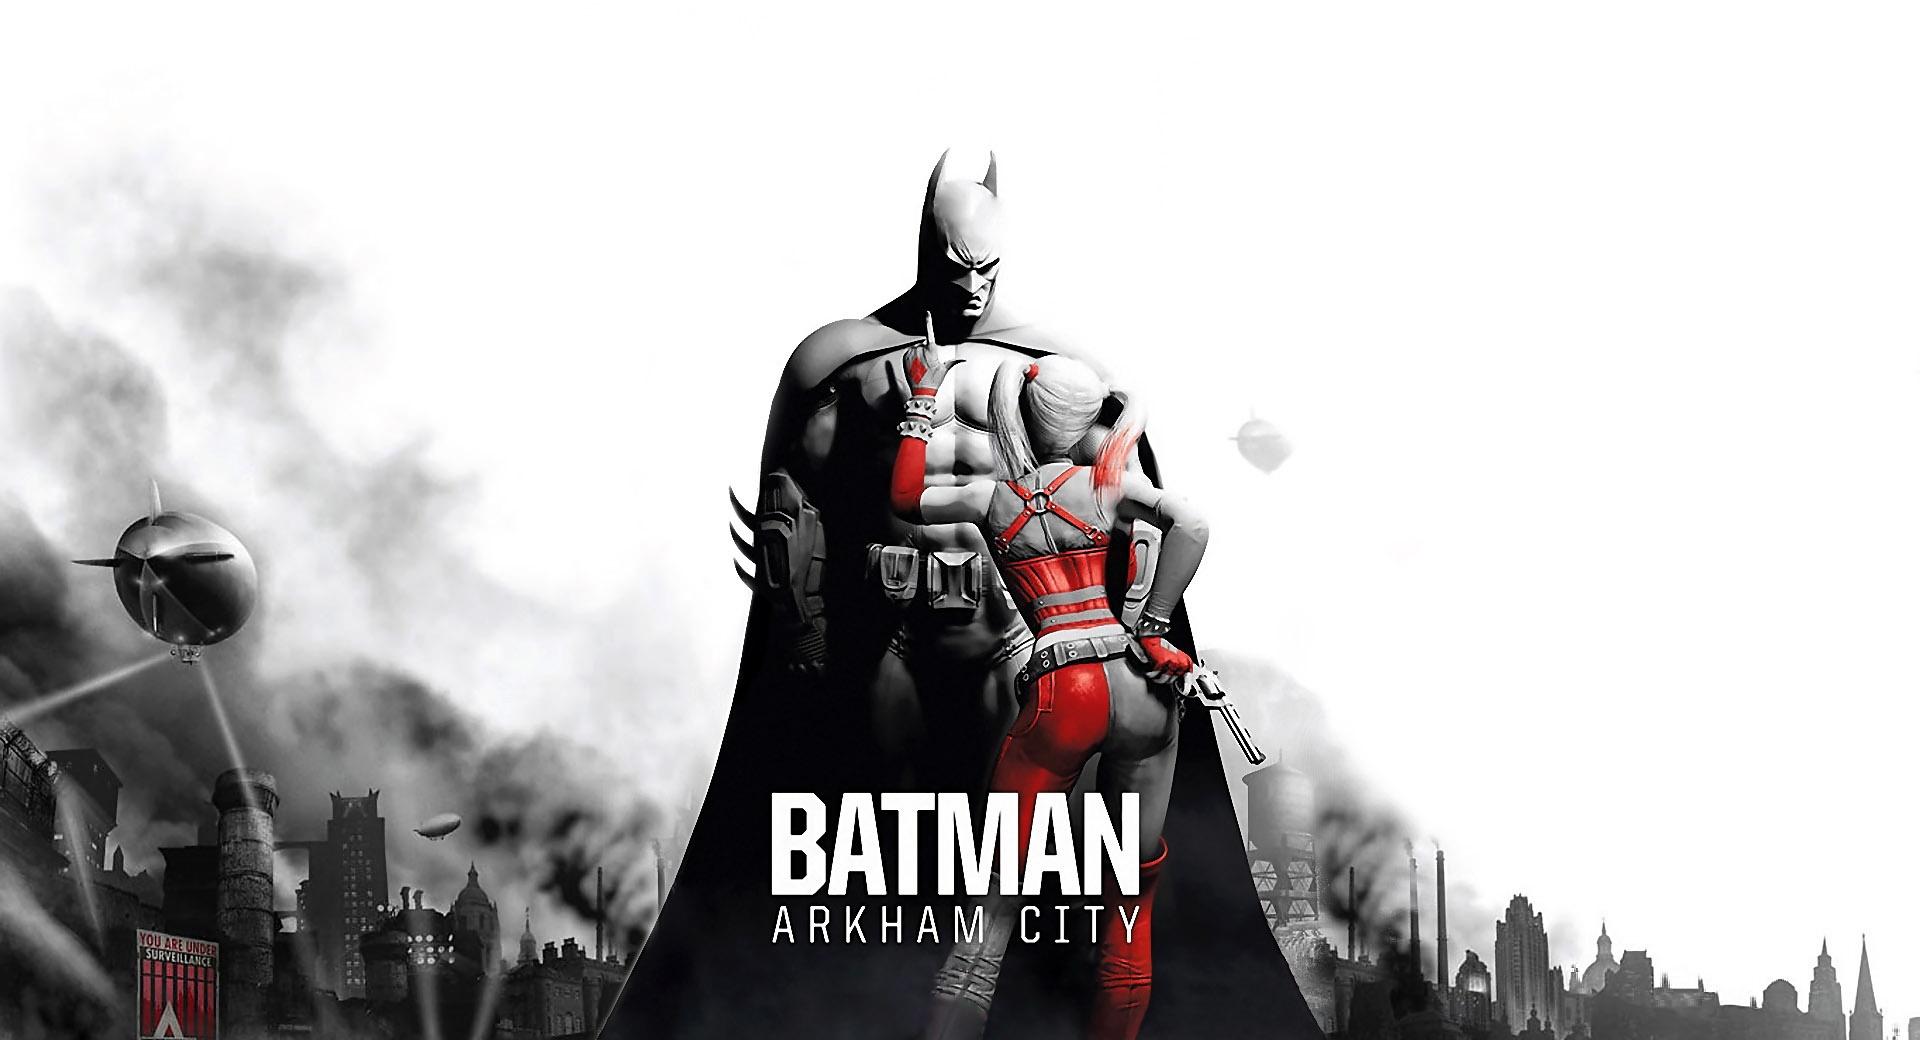 Batman Arkham City - Batman Harley at 1280 x 960 size wallpapers HD quality